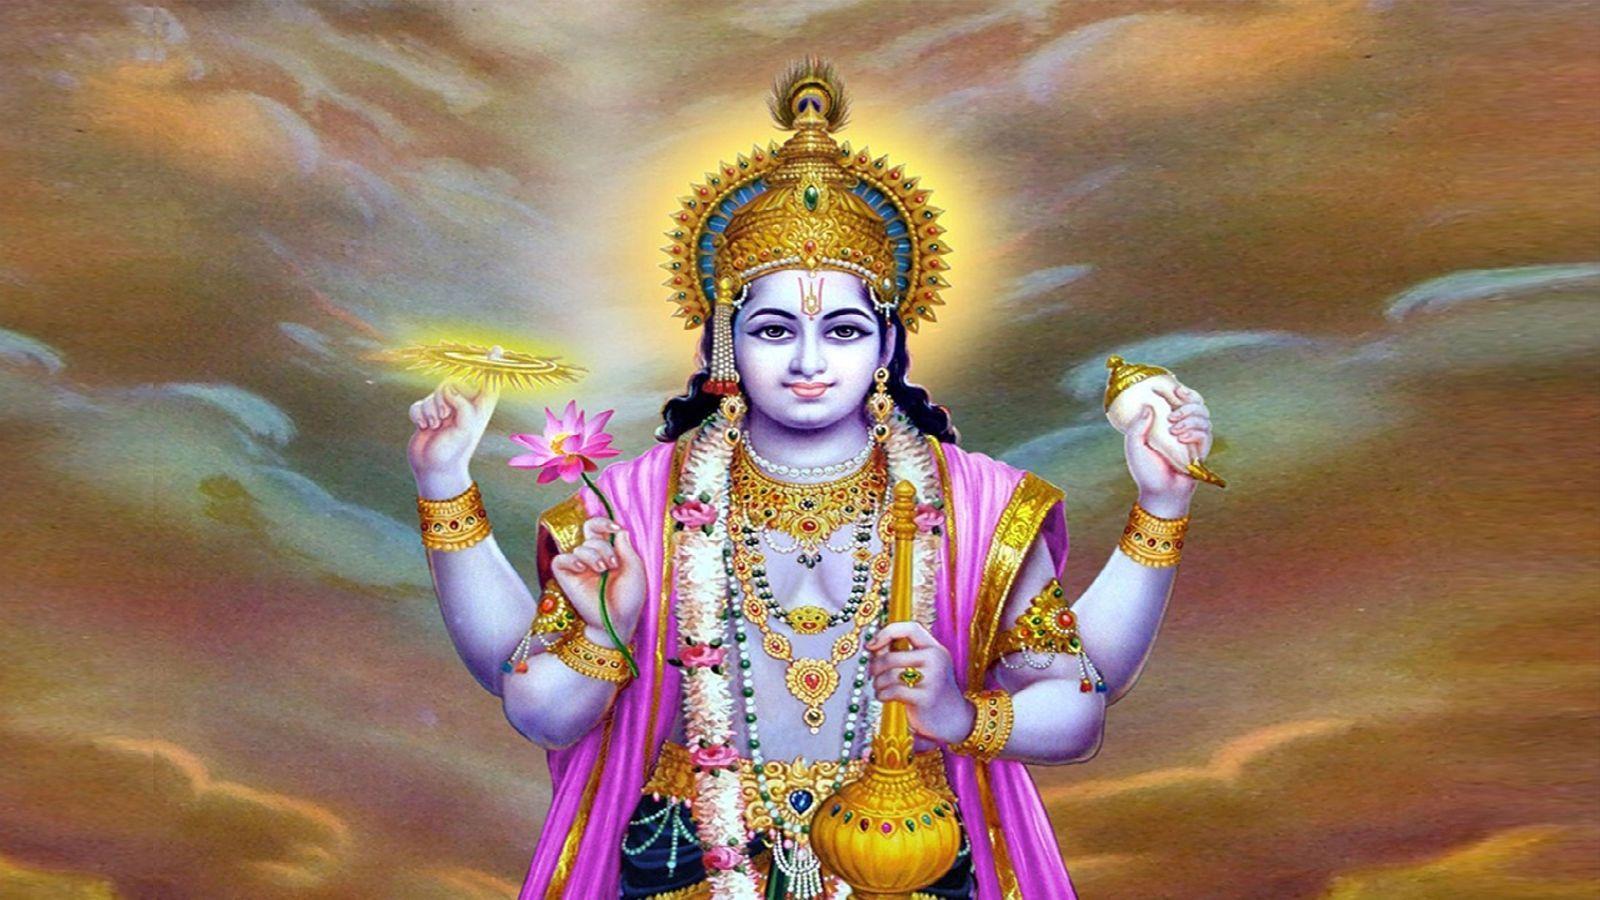 Hindu God Background Image. Epic Car Wallpaper